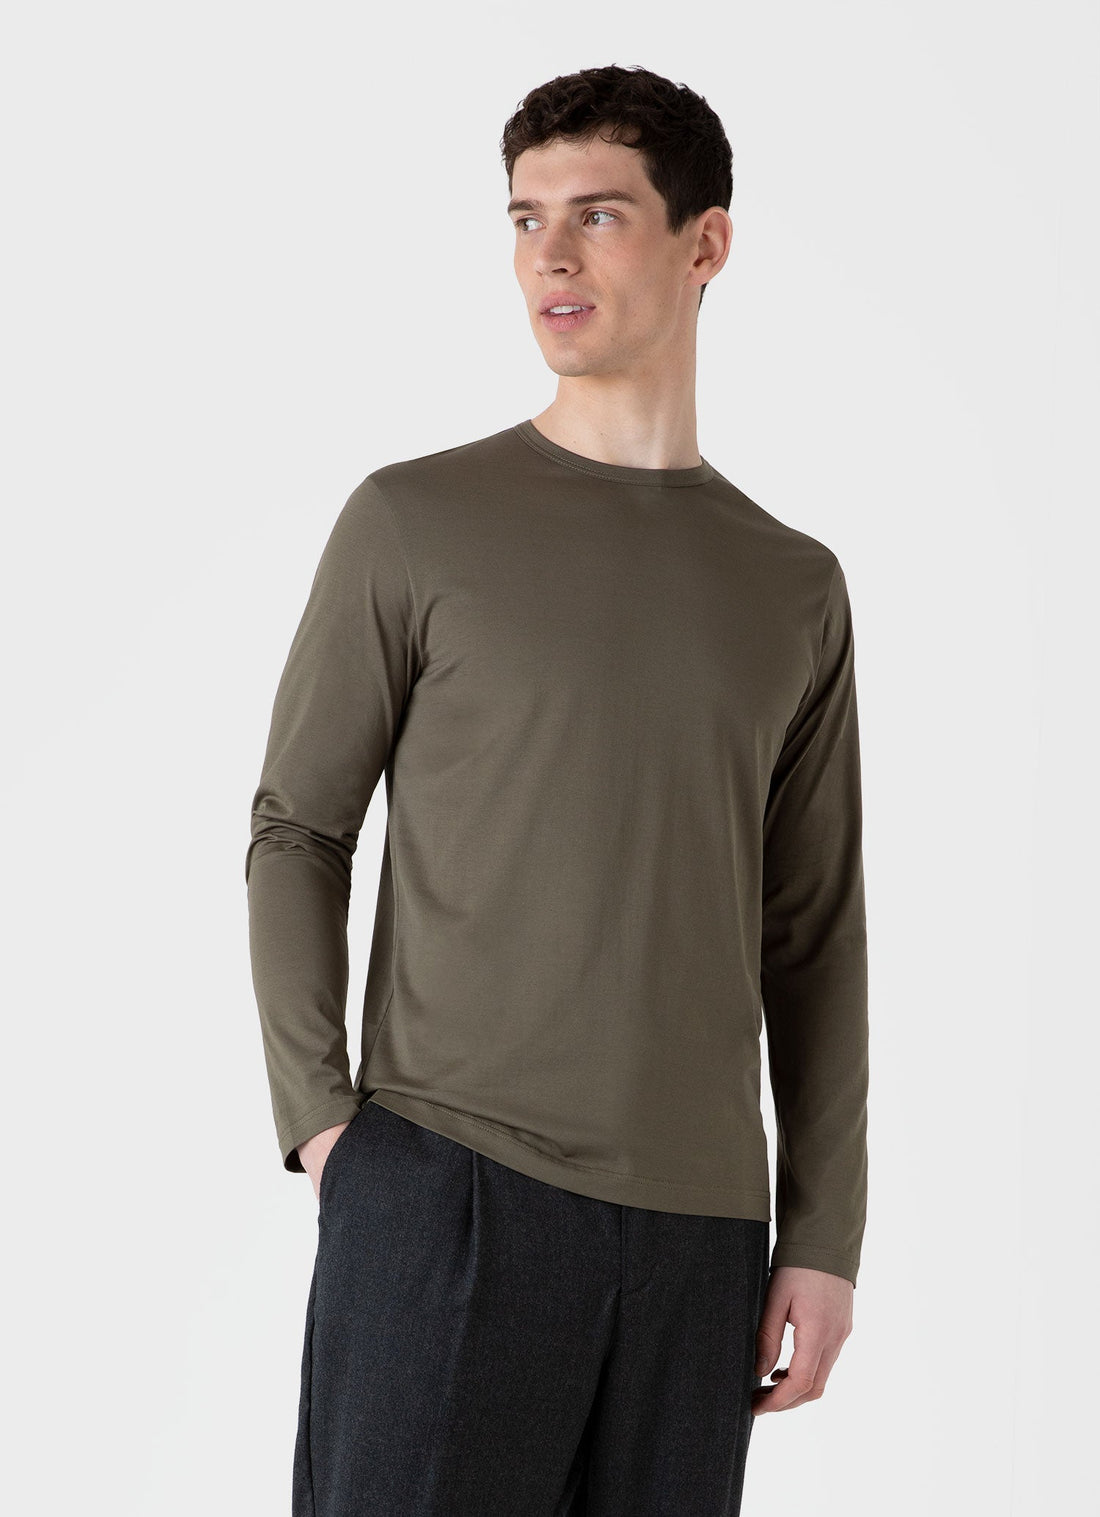 Men's Long Sleeve Classic T-shirt in Khaki